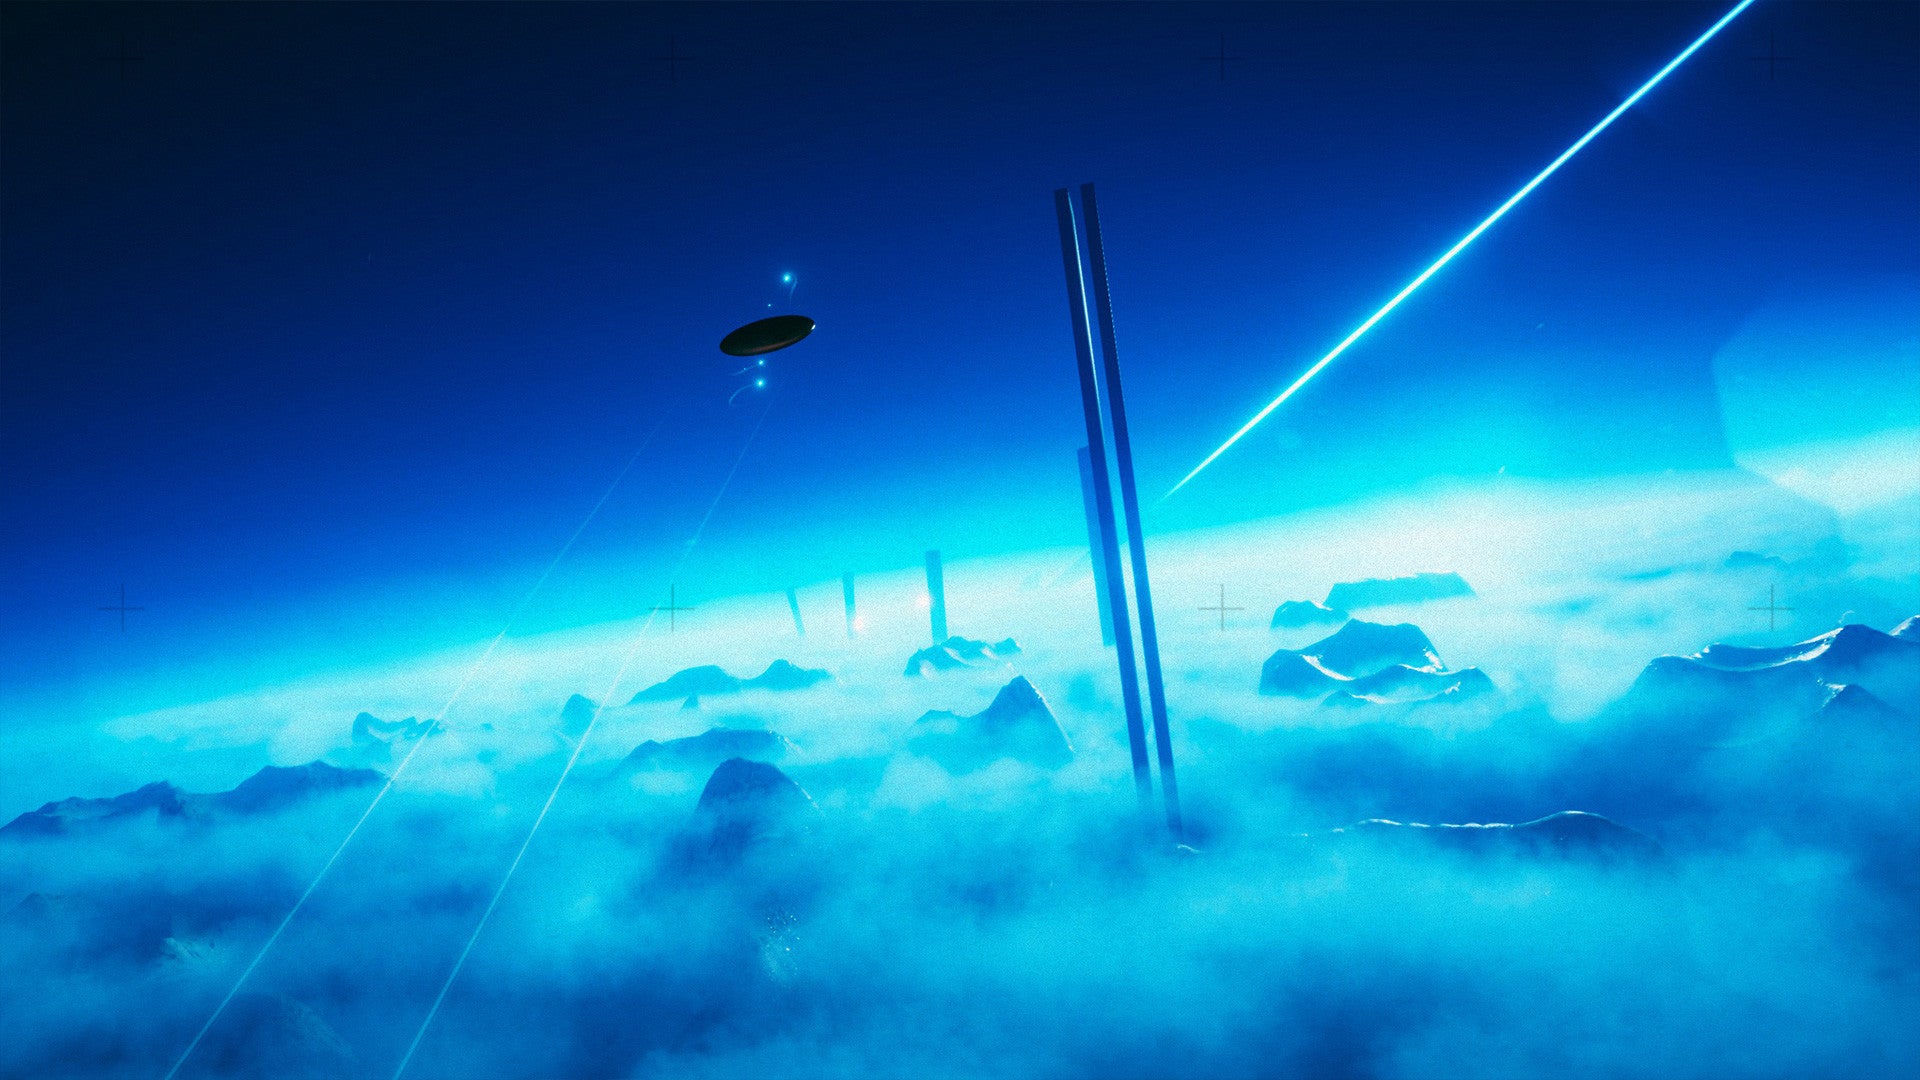 A disc soars through lurid blue skies in an Exo One screenshot.